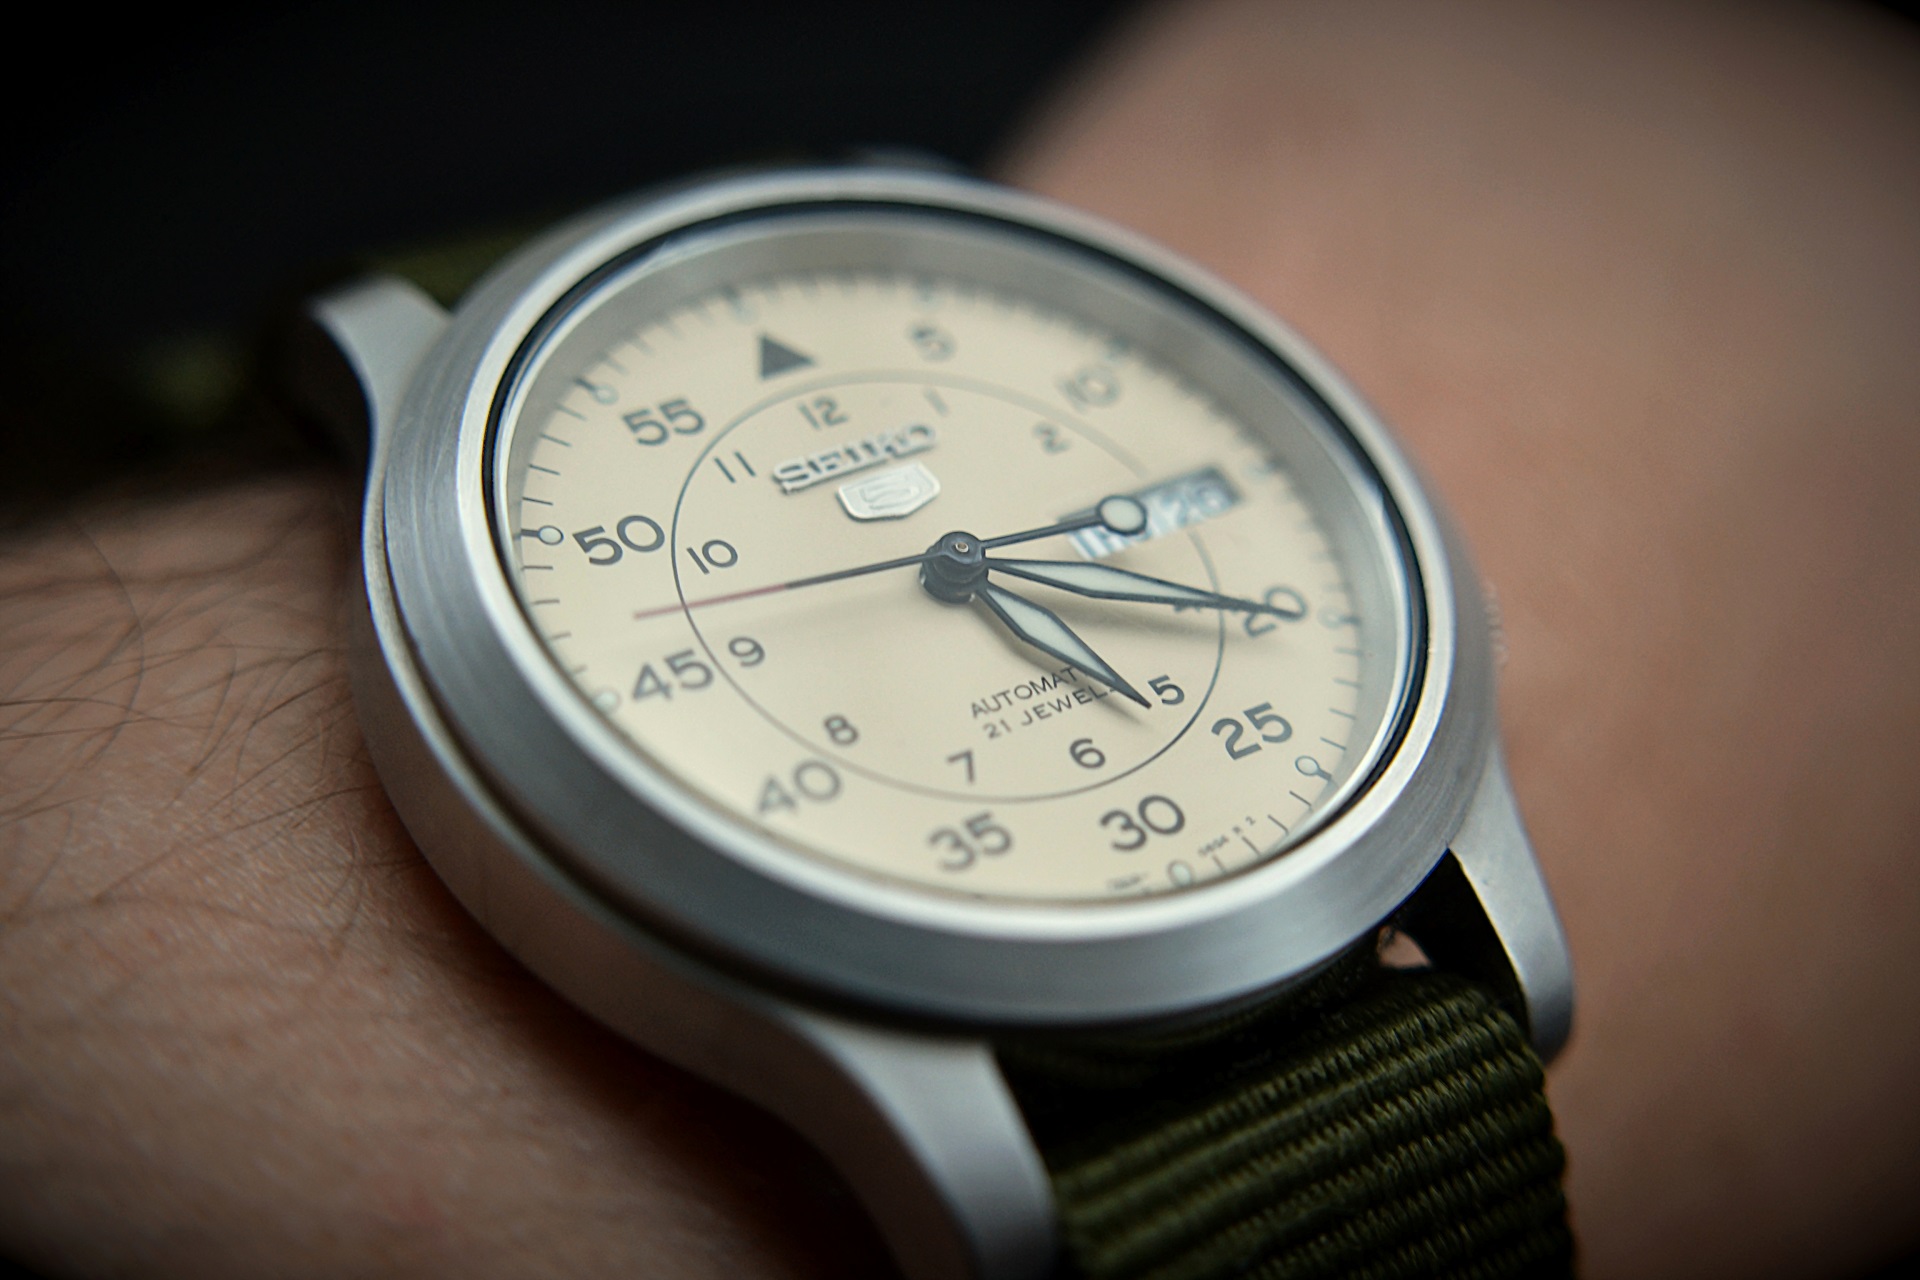 hvad som helst computer bit Owner Review: Seiko 5 SNK803 - An honest look at a gateway watch.